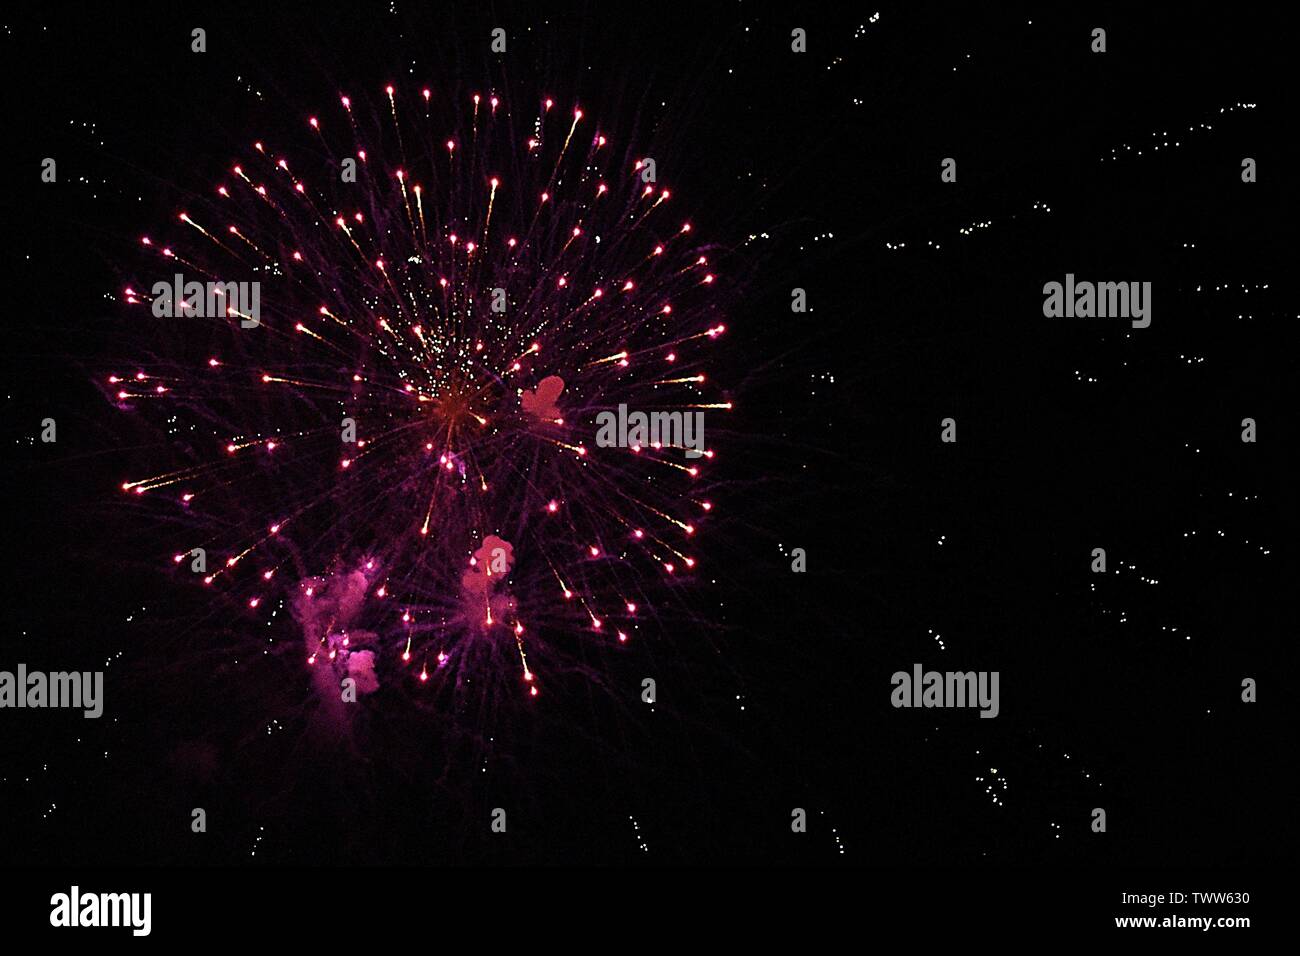 Firework celebrations in the night sky Stock Photo